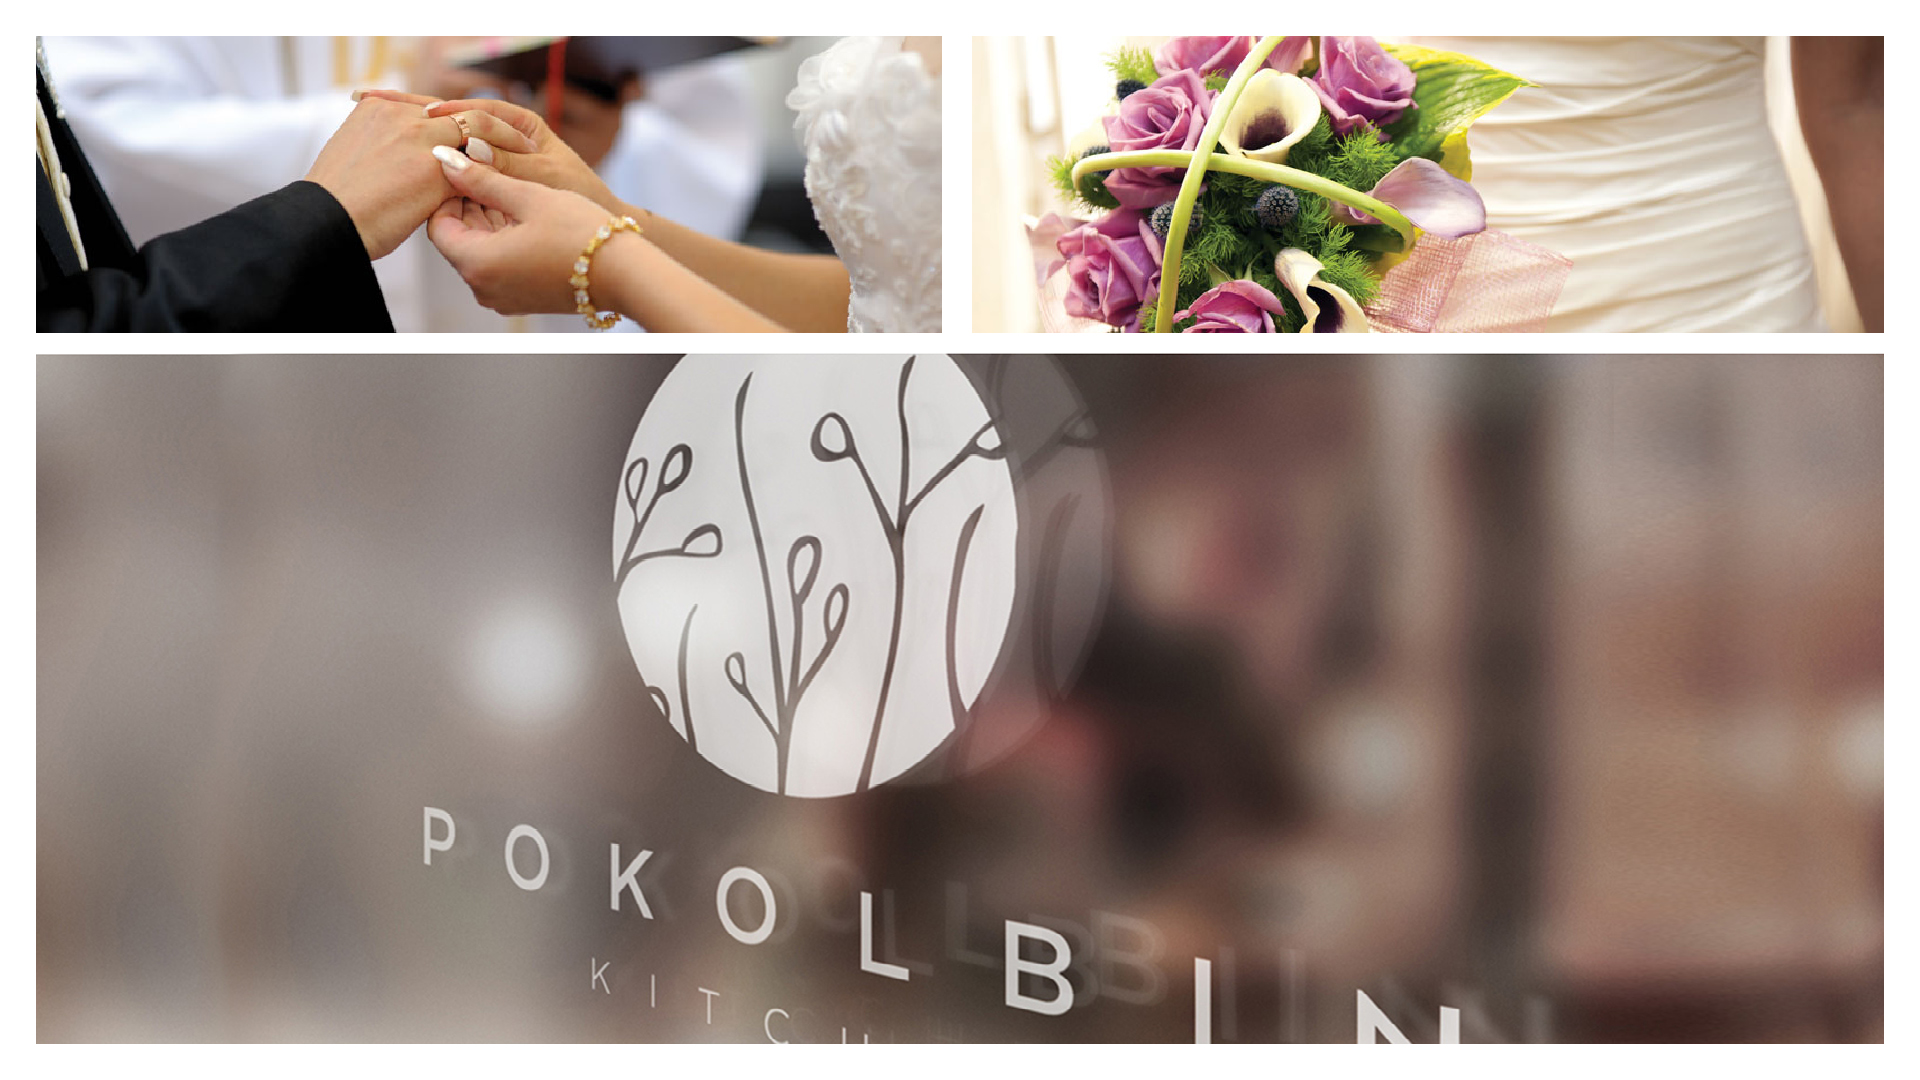 Pokolbin Kitchen brand identity development by think creative agency8